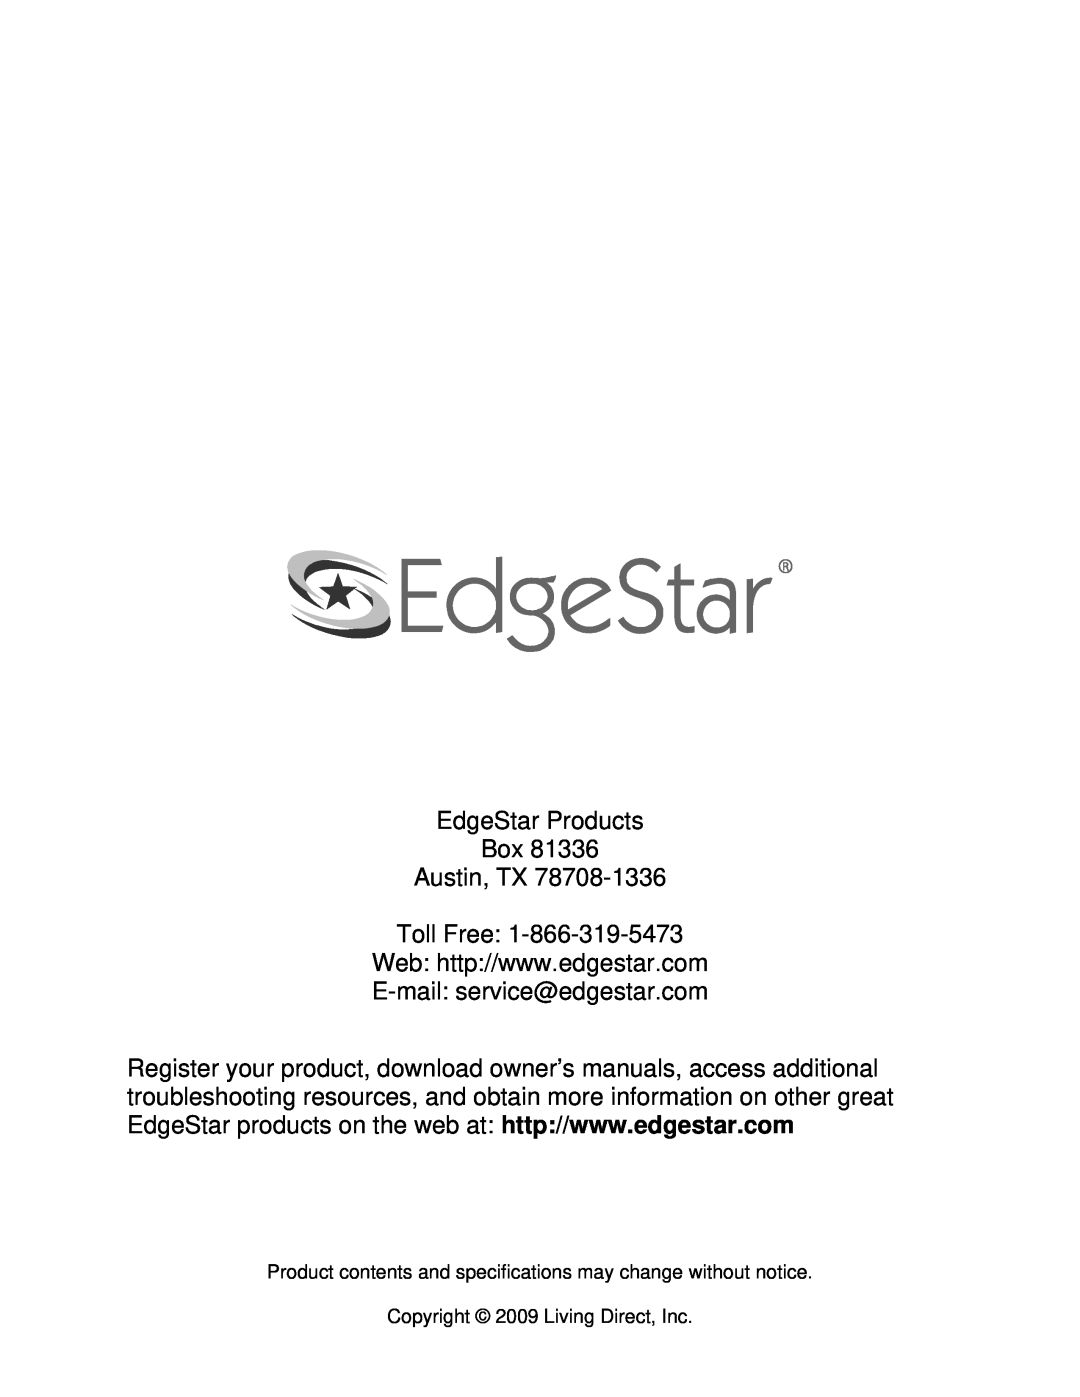 EdgeStar AP14009COM owner manual EdgeStar Products Box Austin, TX Toll Free, Copyright 2009 Living Direct, Inc 